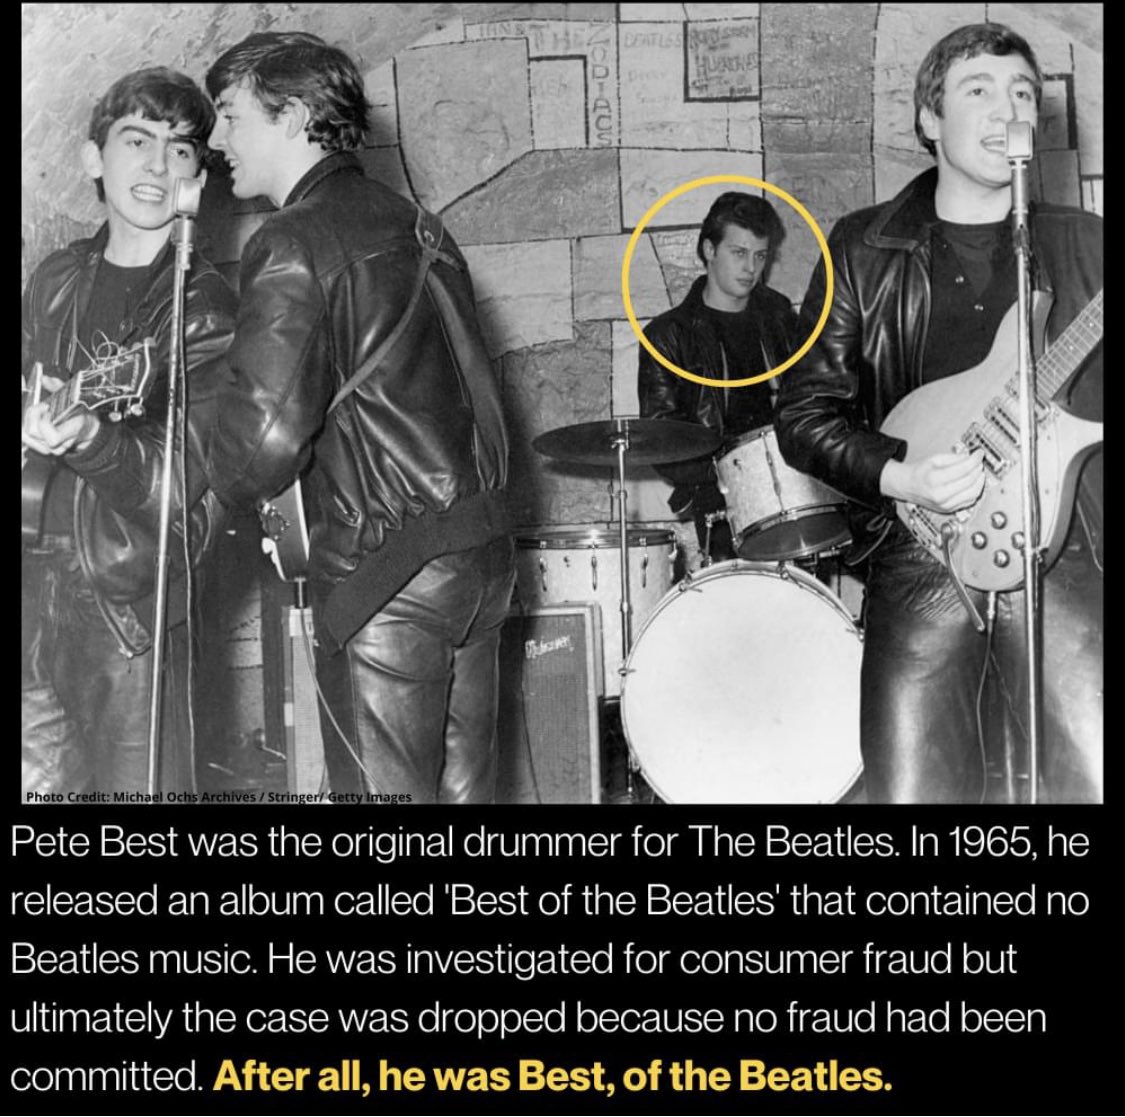 Best of the Beatles 

#PeteBest